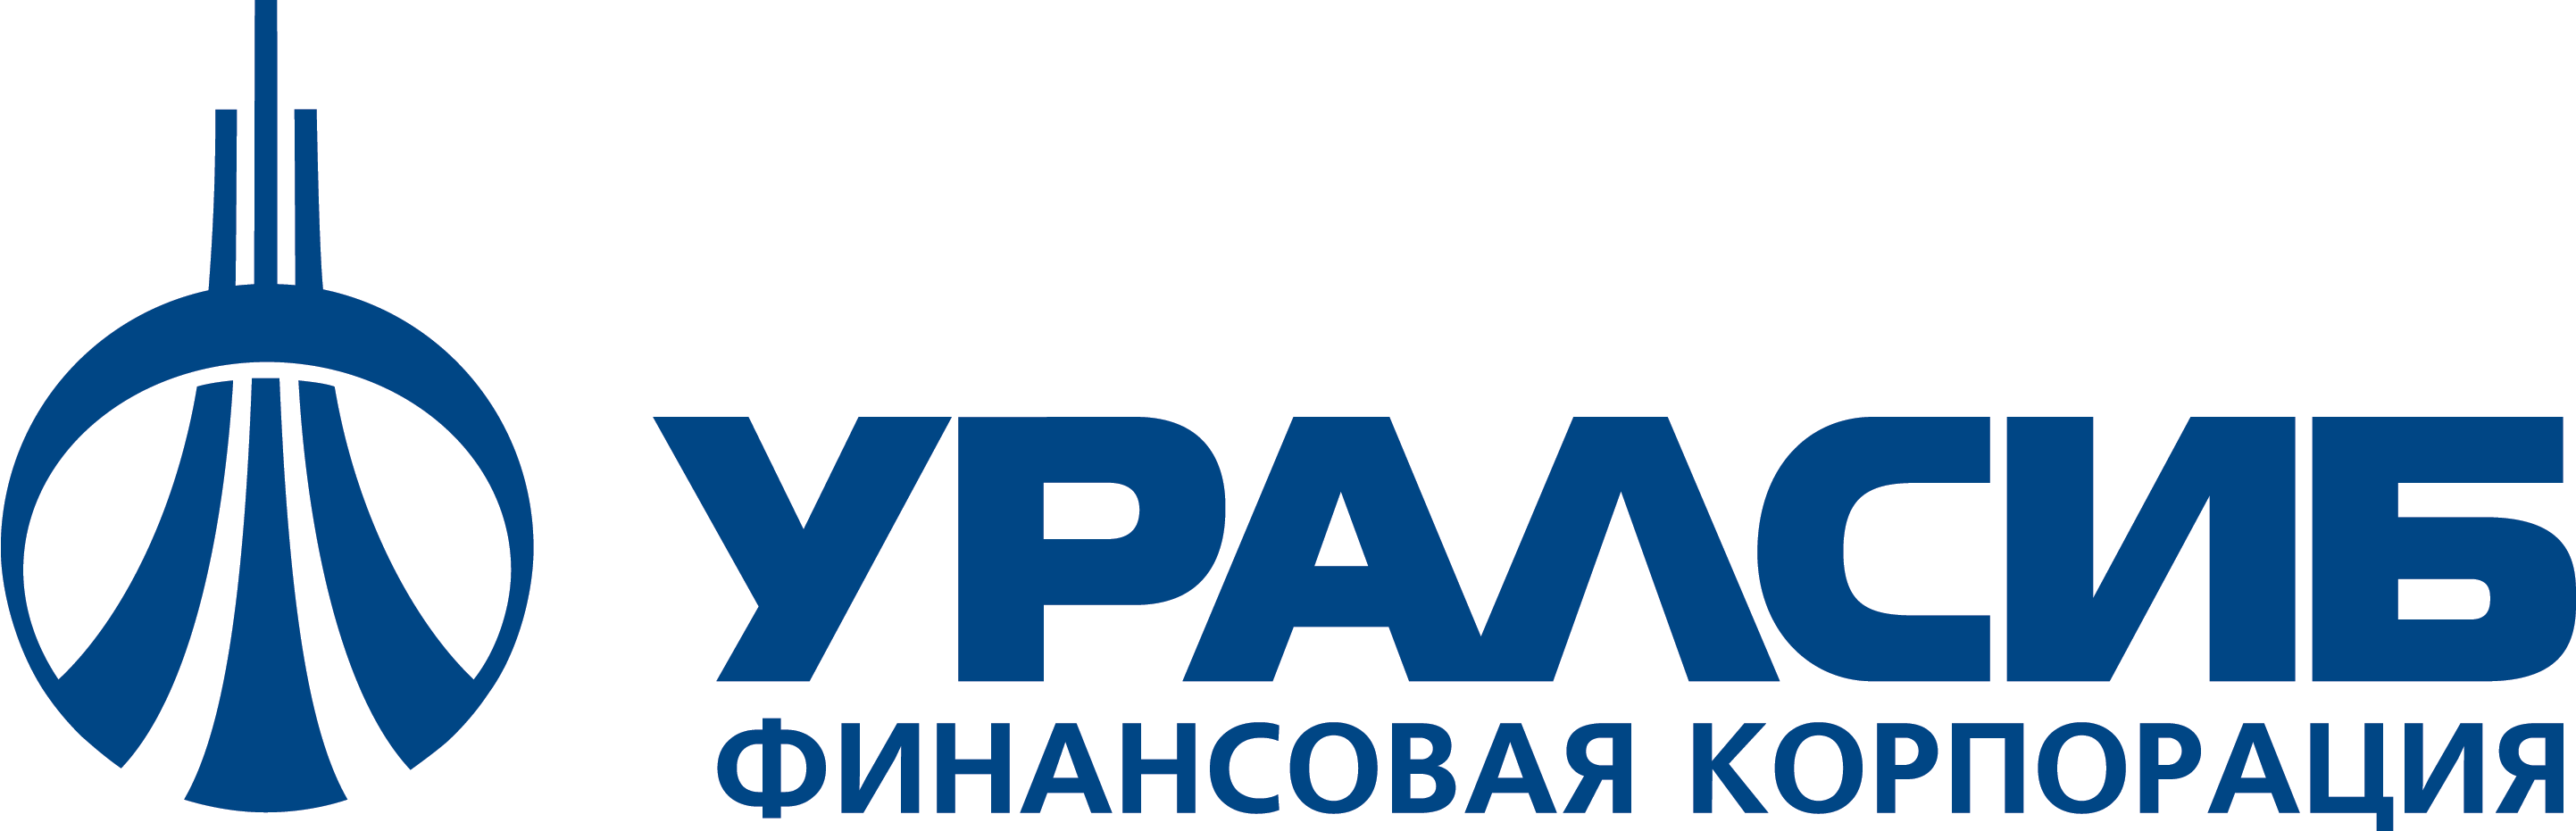 Логотип банка УРАЛСИБ